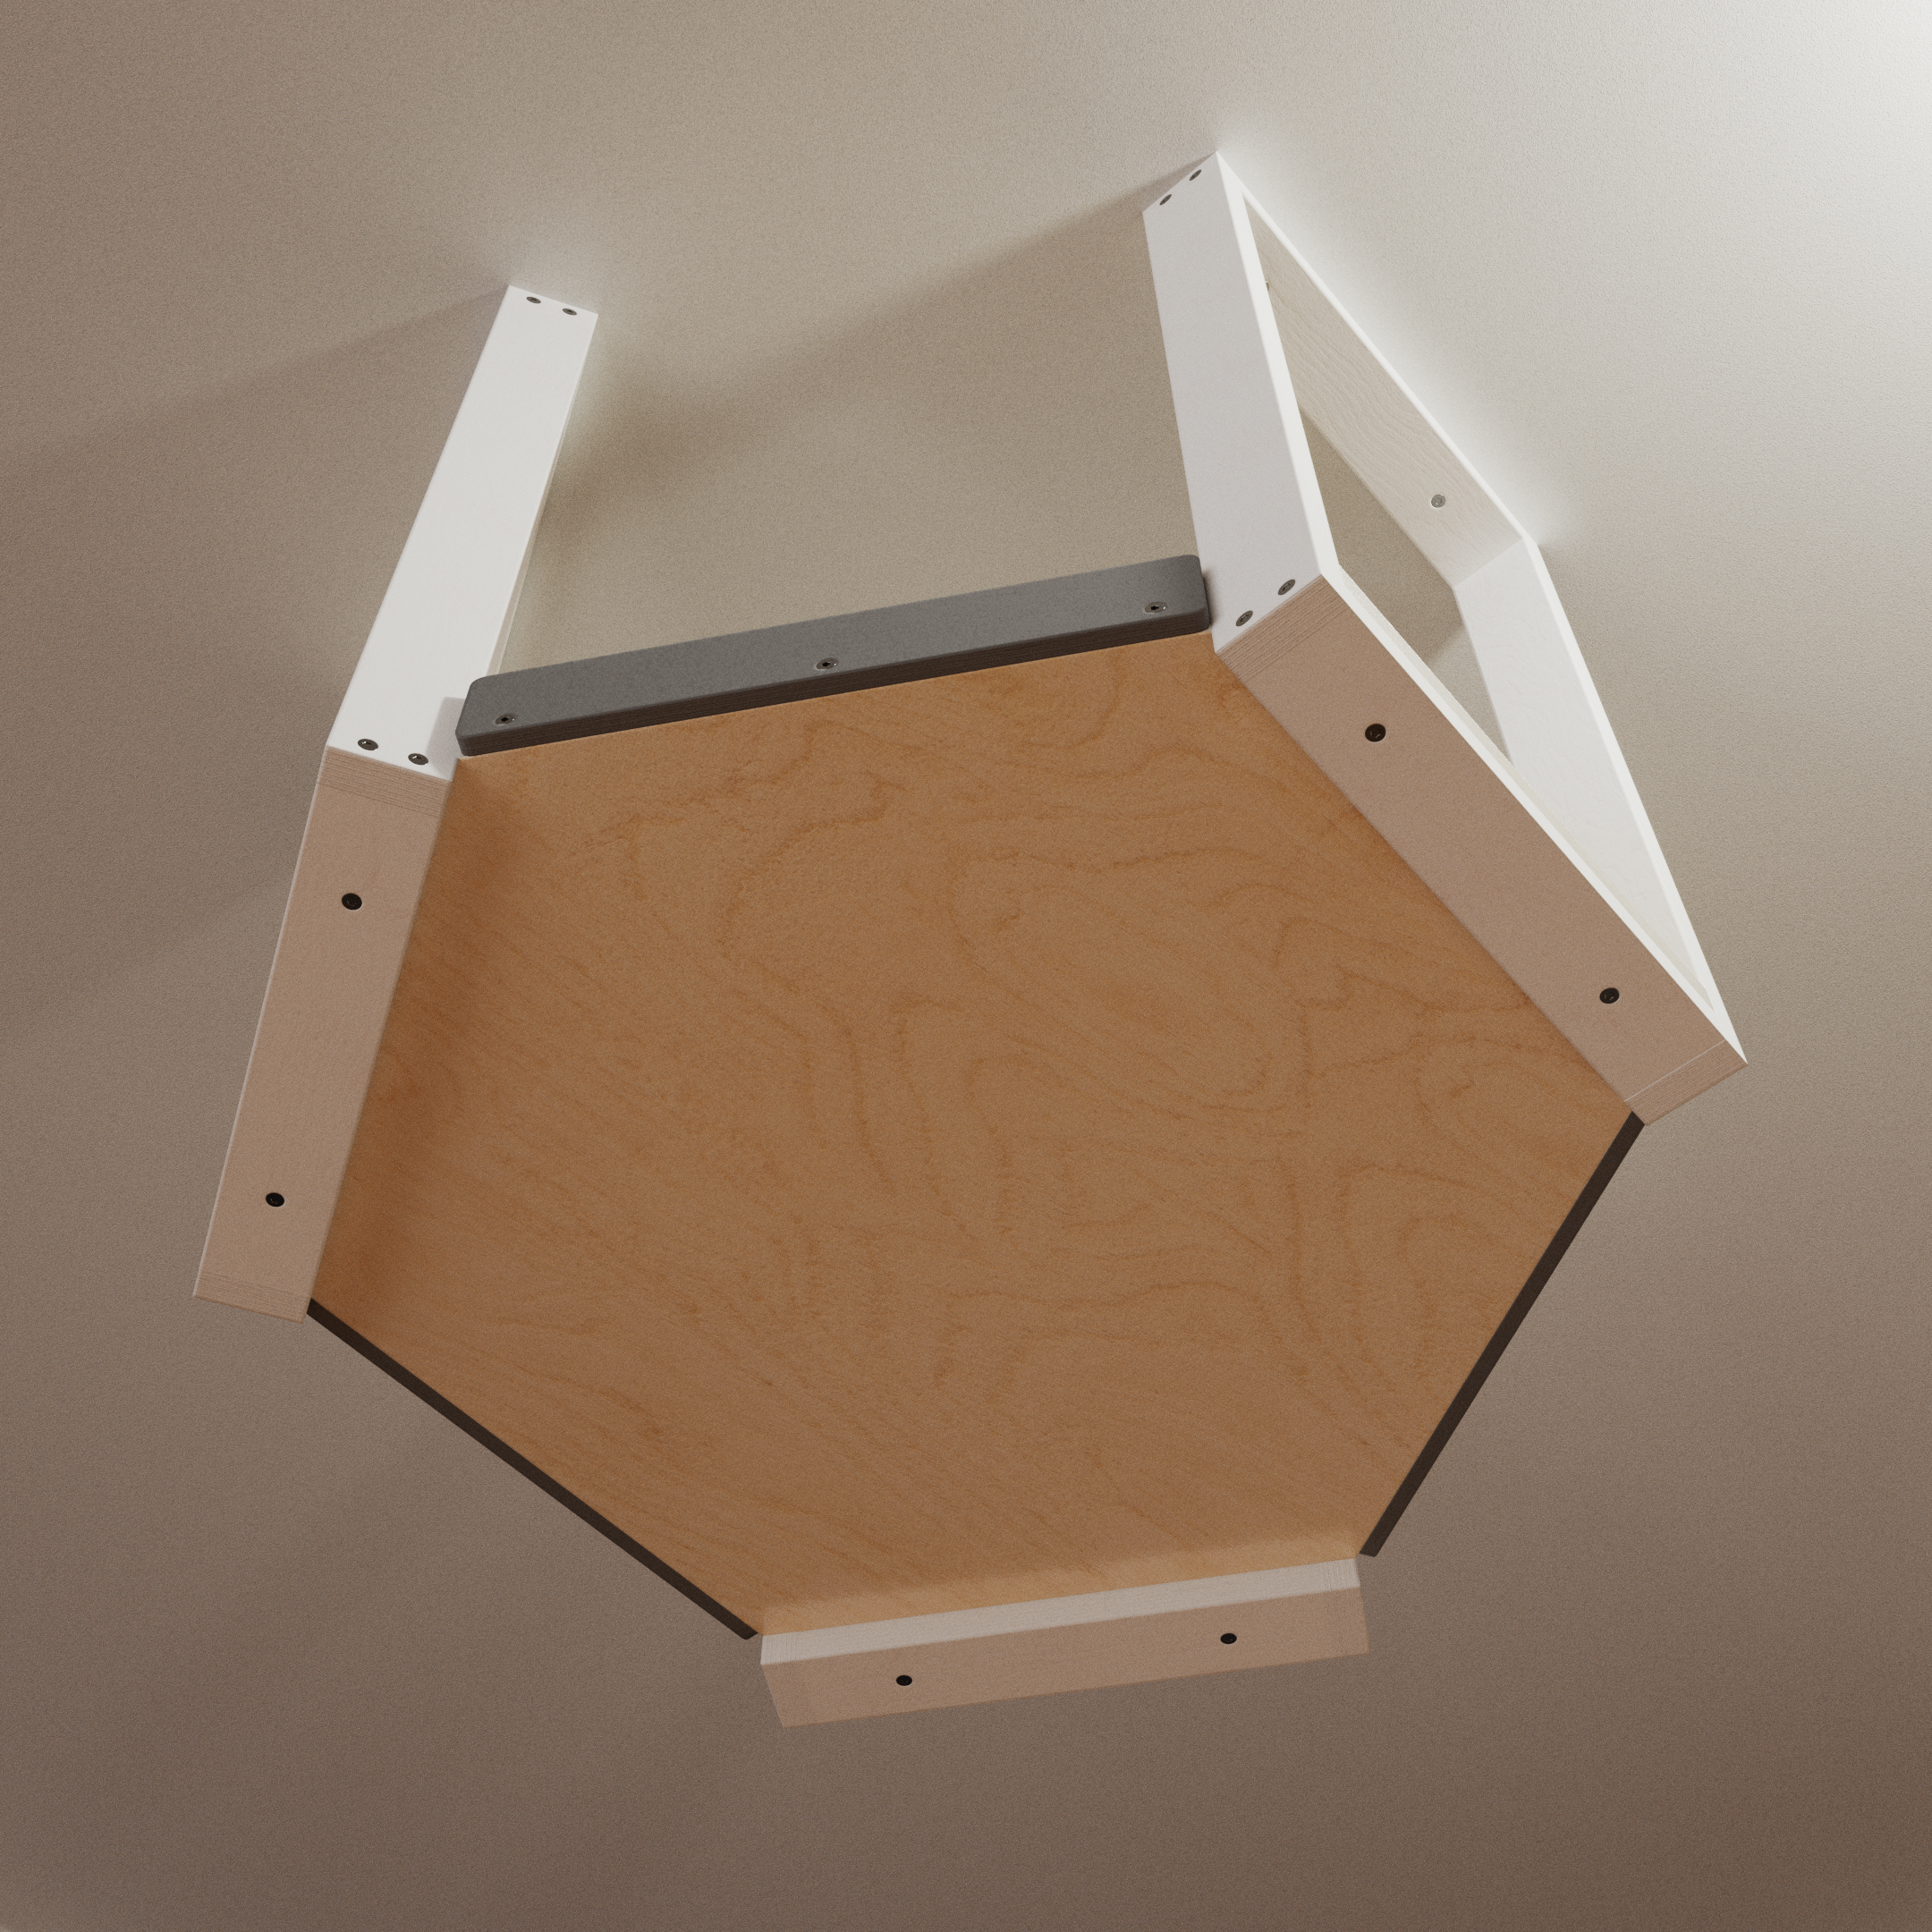 Cat Ceiling Shelf - Wally Skyhex - ceiling mounted cat shelf, hexagonal hub for multi way platform/bridge access, Cat intersection perch - Scratchy Things Premium Pet Furniture